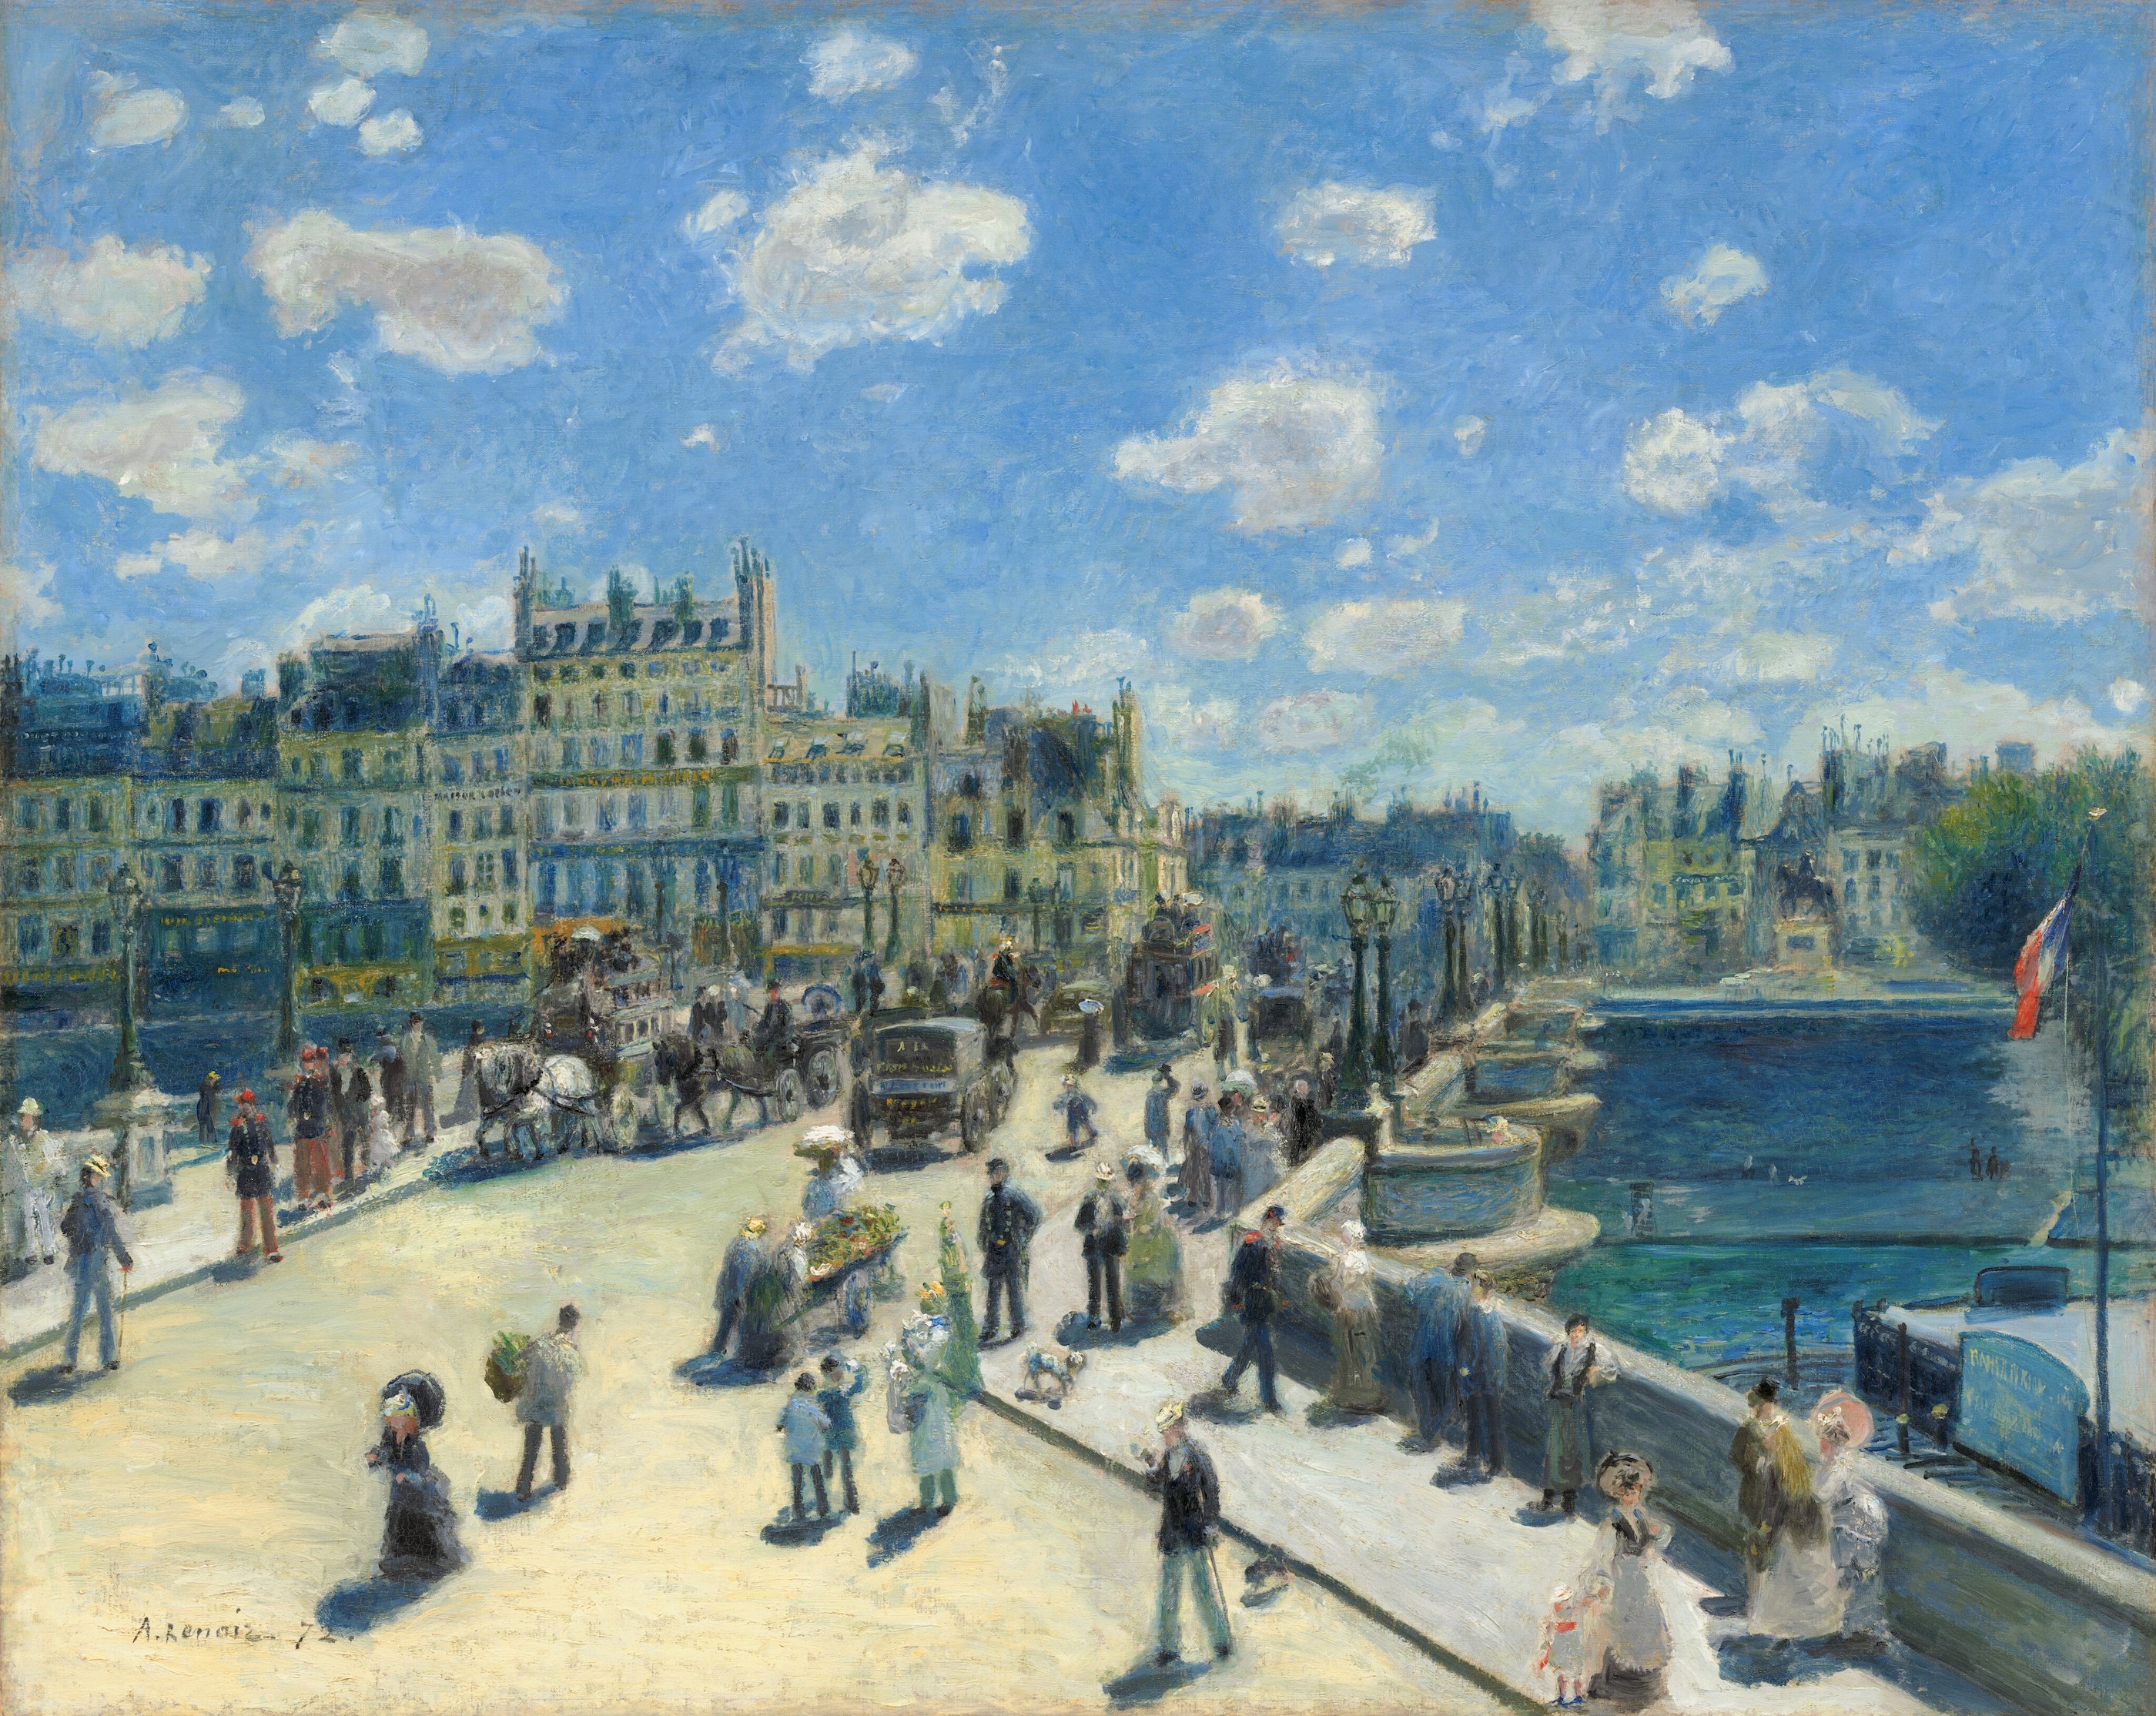 巴黎新橋 by Pierre-Auguste Renoir - 1872 - 75.3 x 93.7 cm 